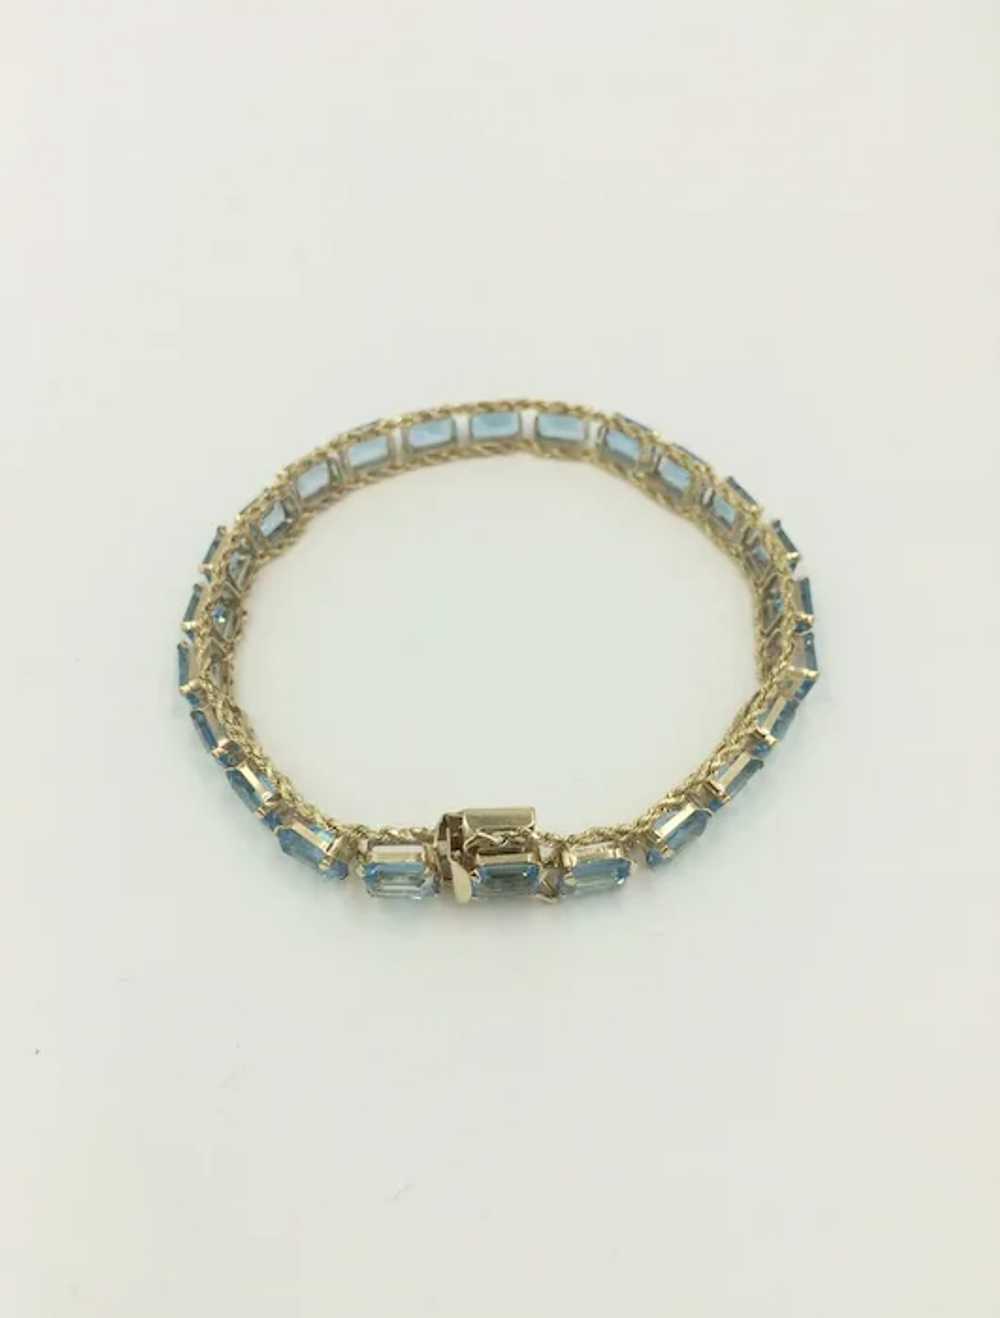 10K Gold Blue Topaz Gemstone Rope Chain Bracelet - image 5